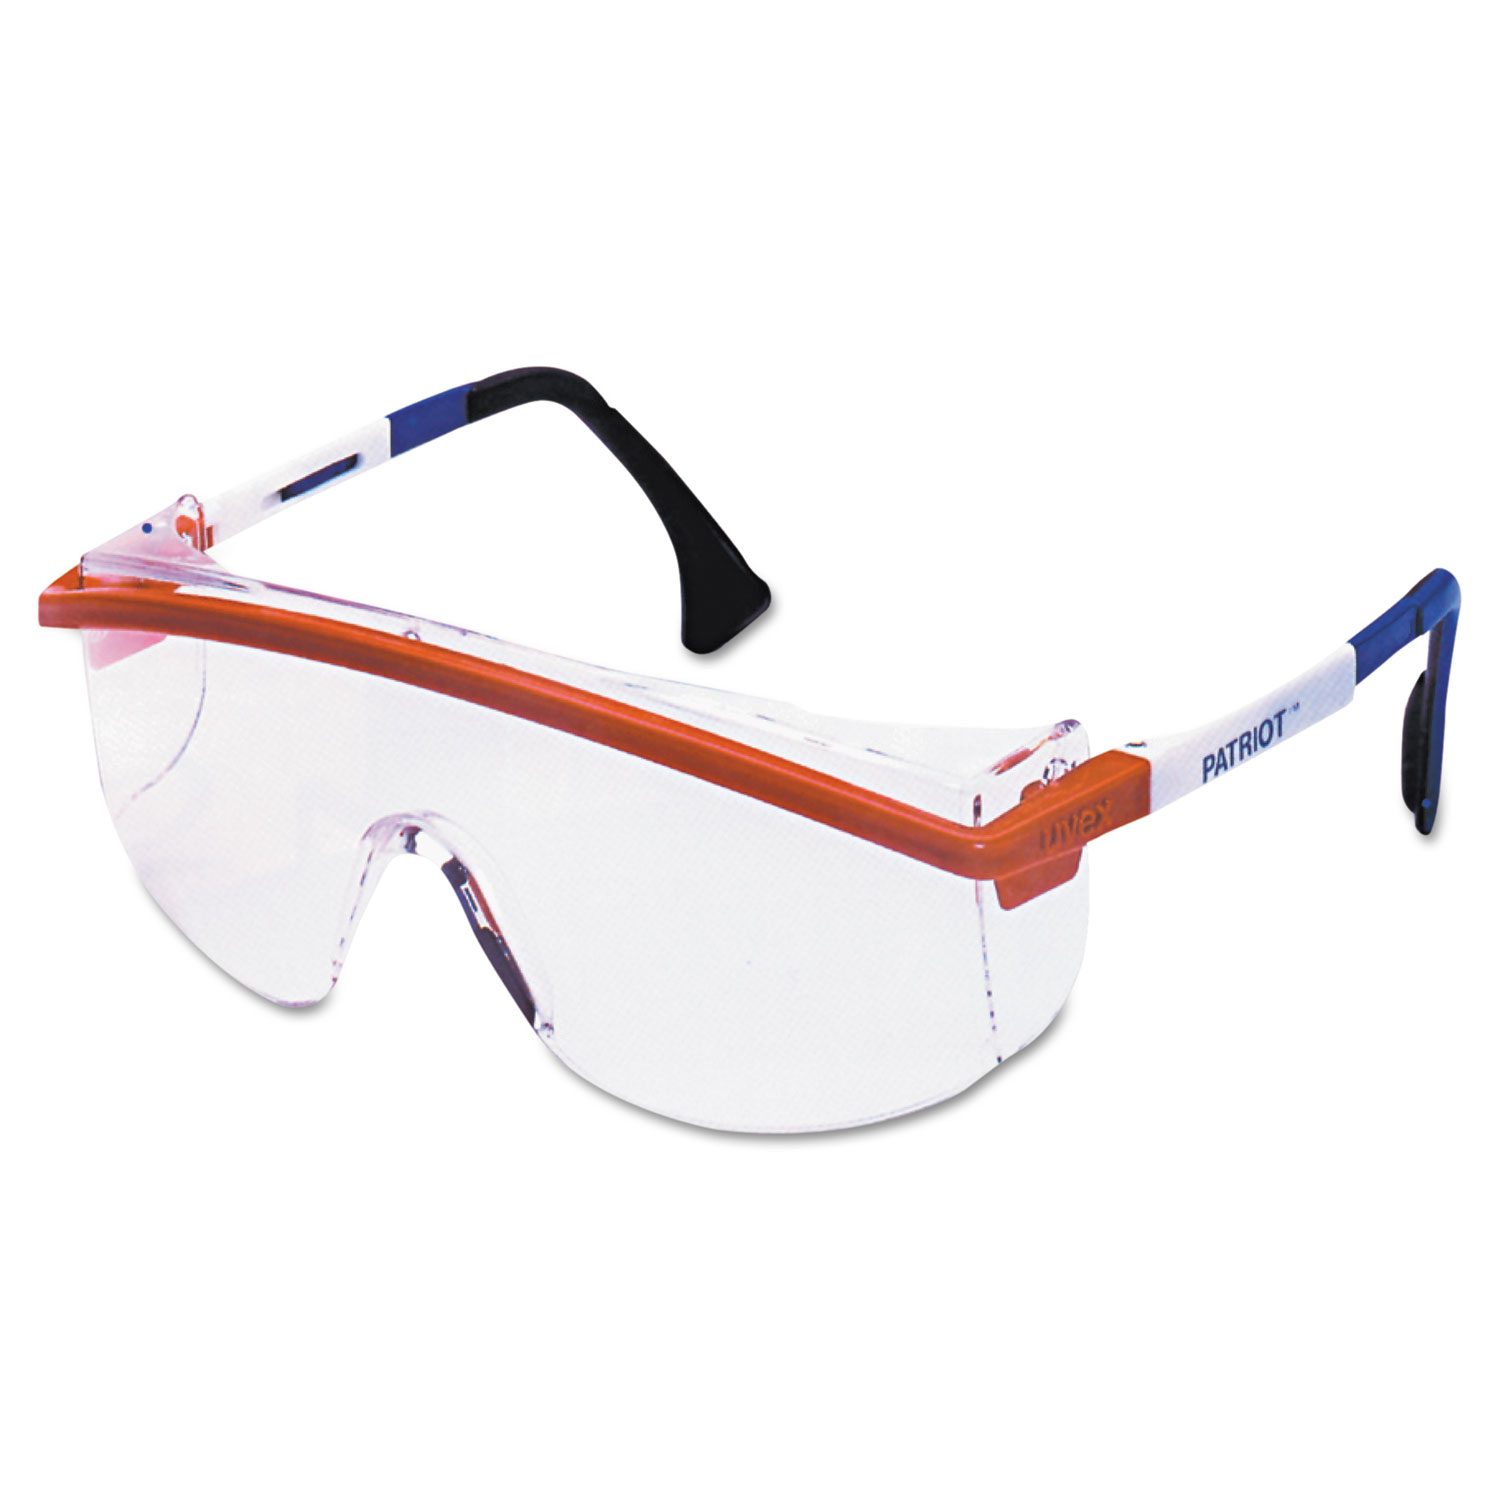 Astrospec 3000 Safety Eyewear